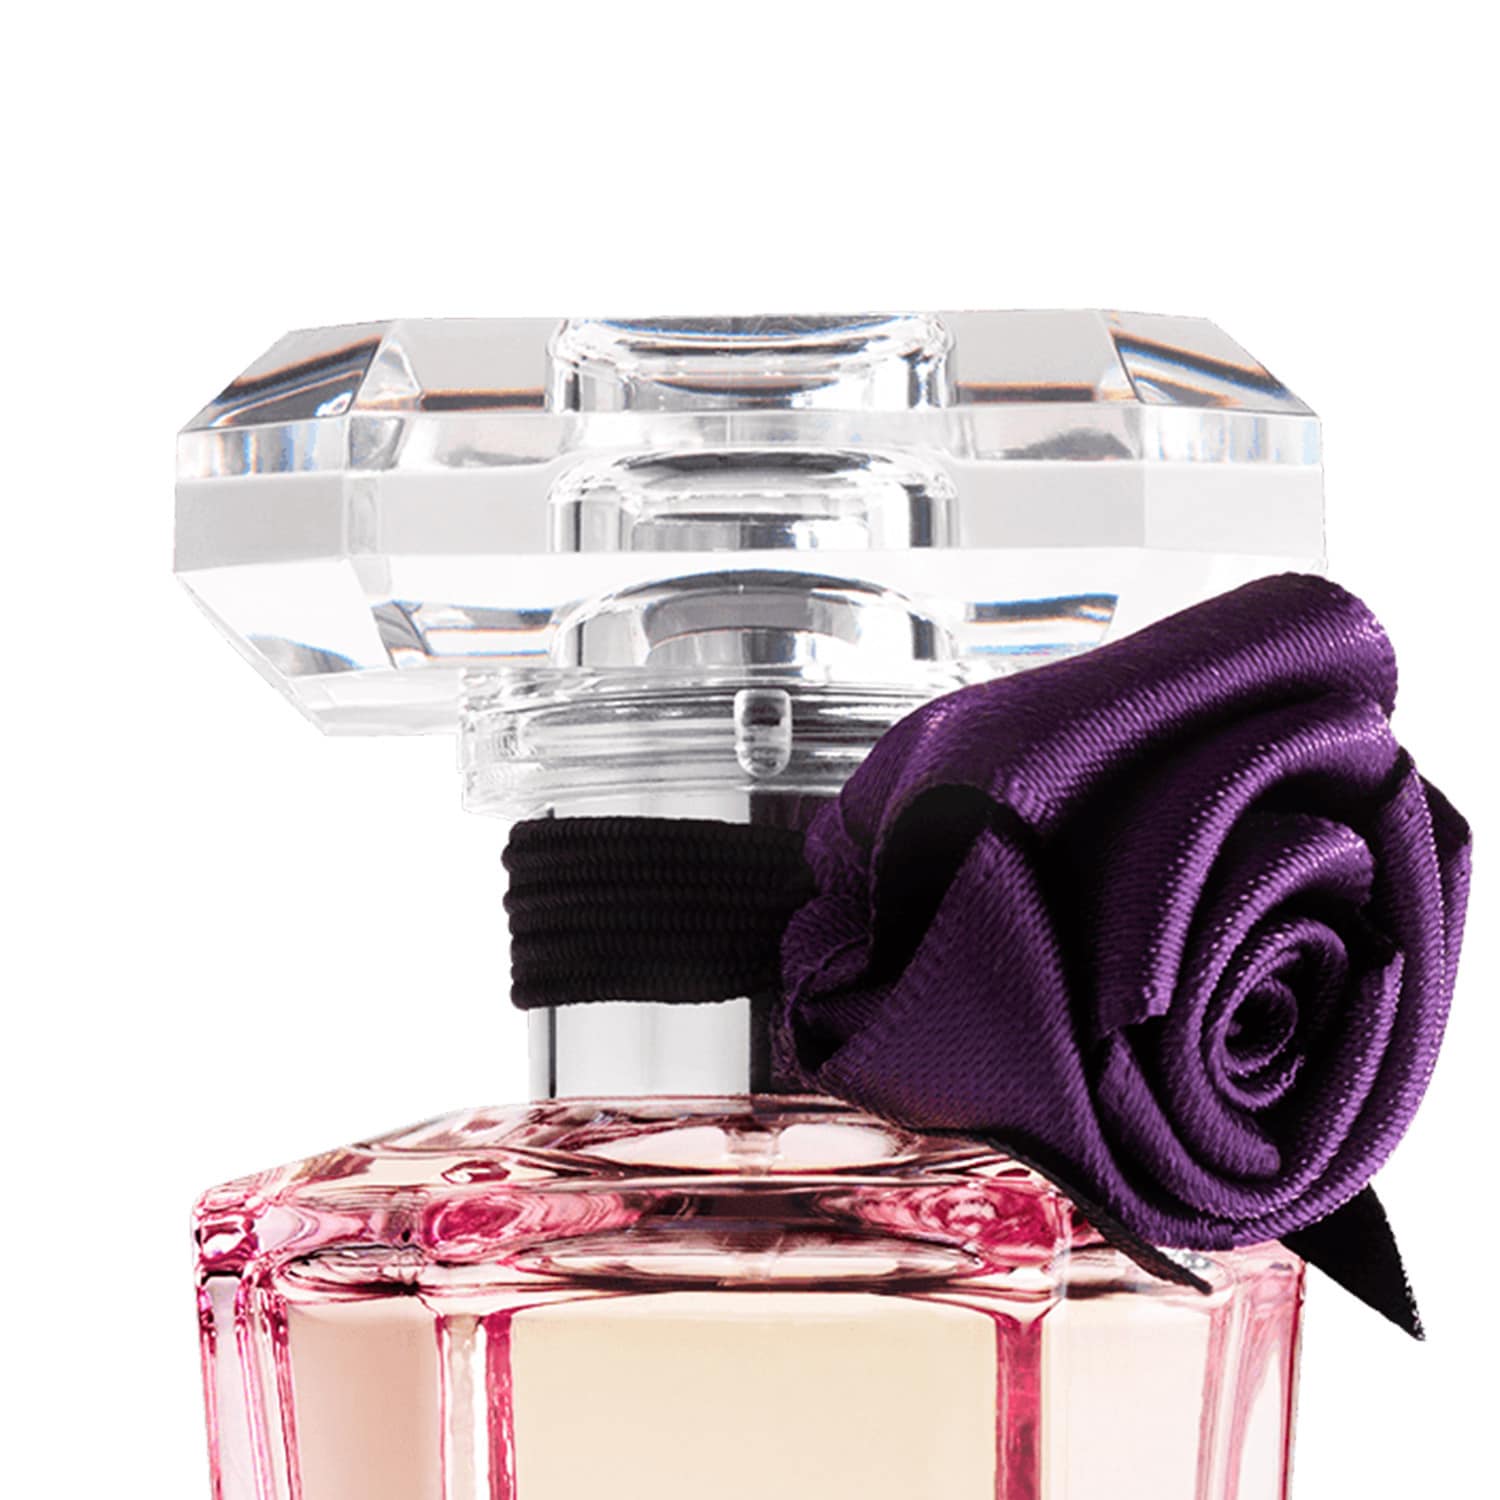 Lancome Tresor Midnight Rose L'Eau de Parfum | My Perfume Shop Australia